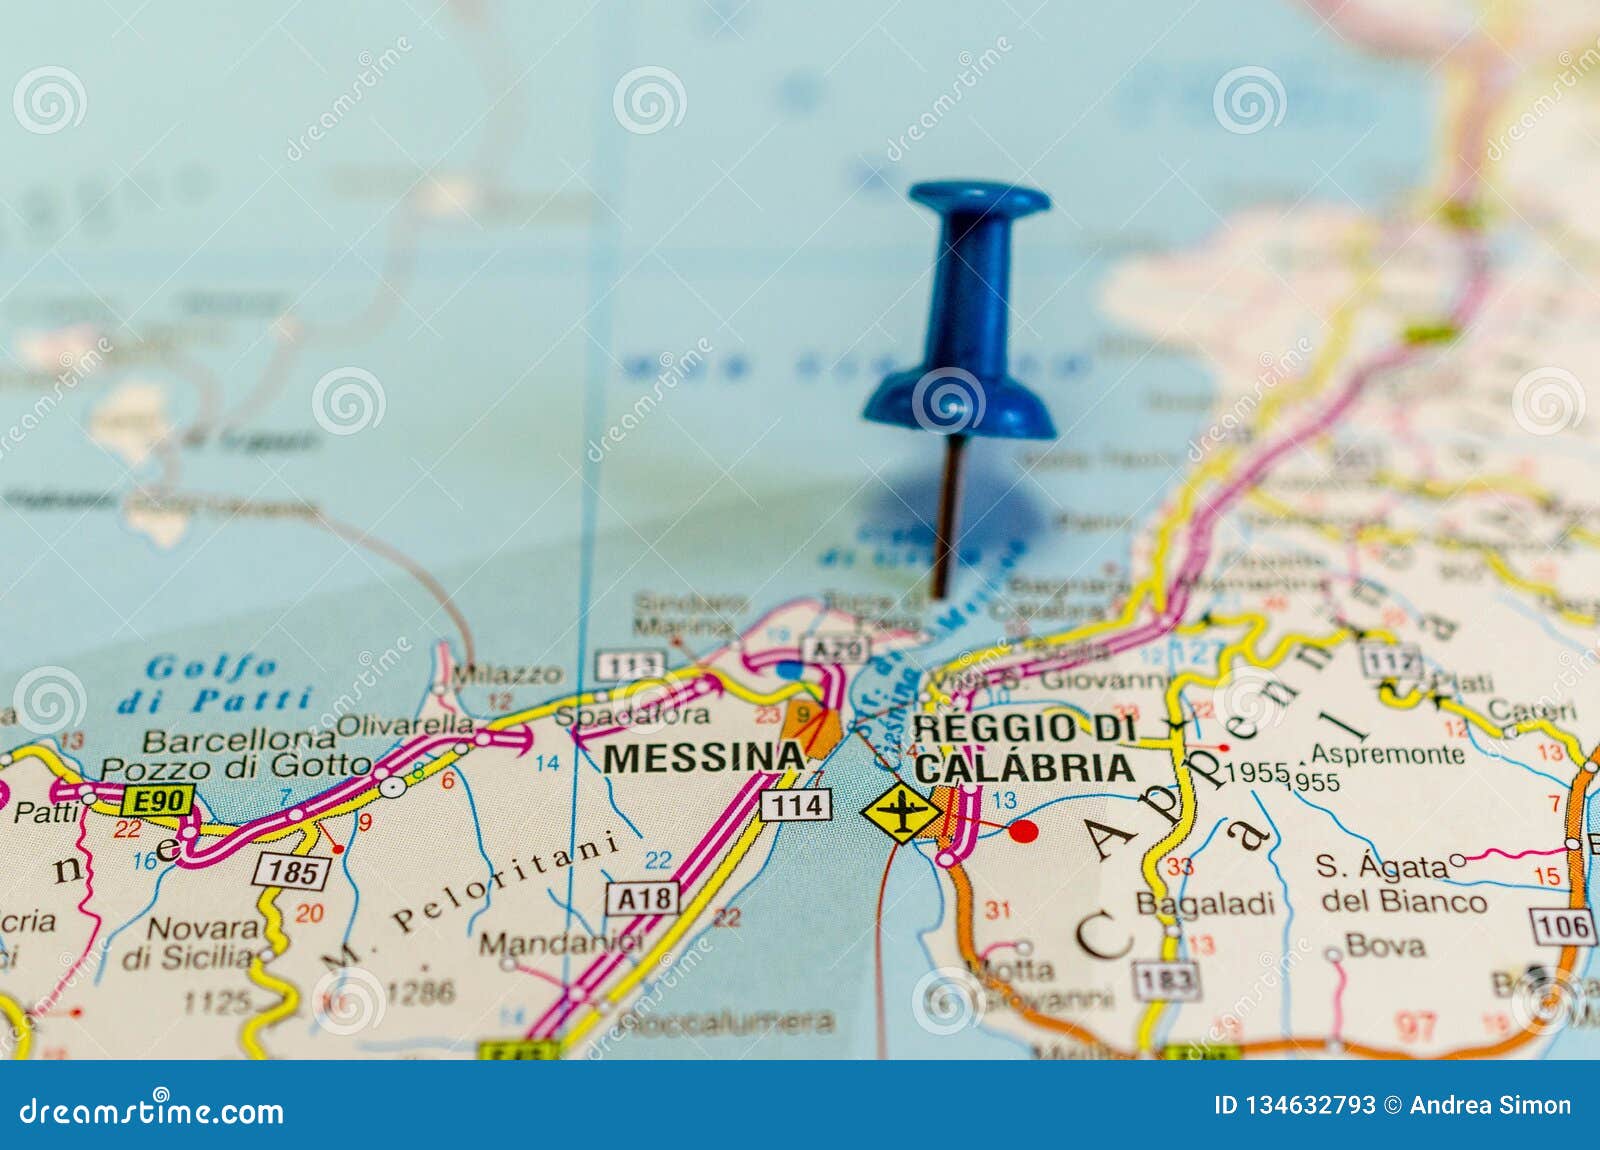 Reggio Calabria Map Photos - Free Royalty-Free Stock Photos from Dreamstime